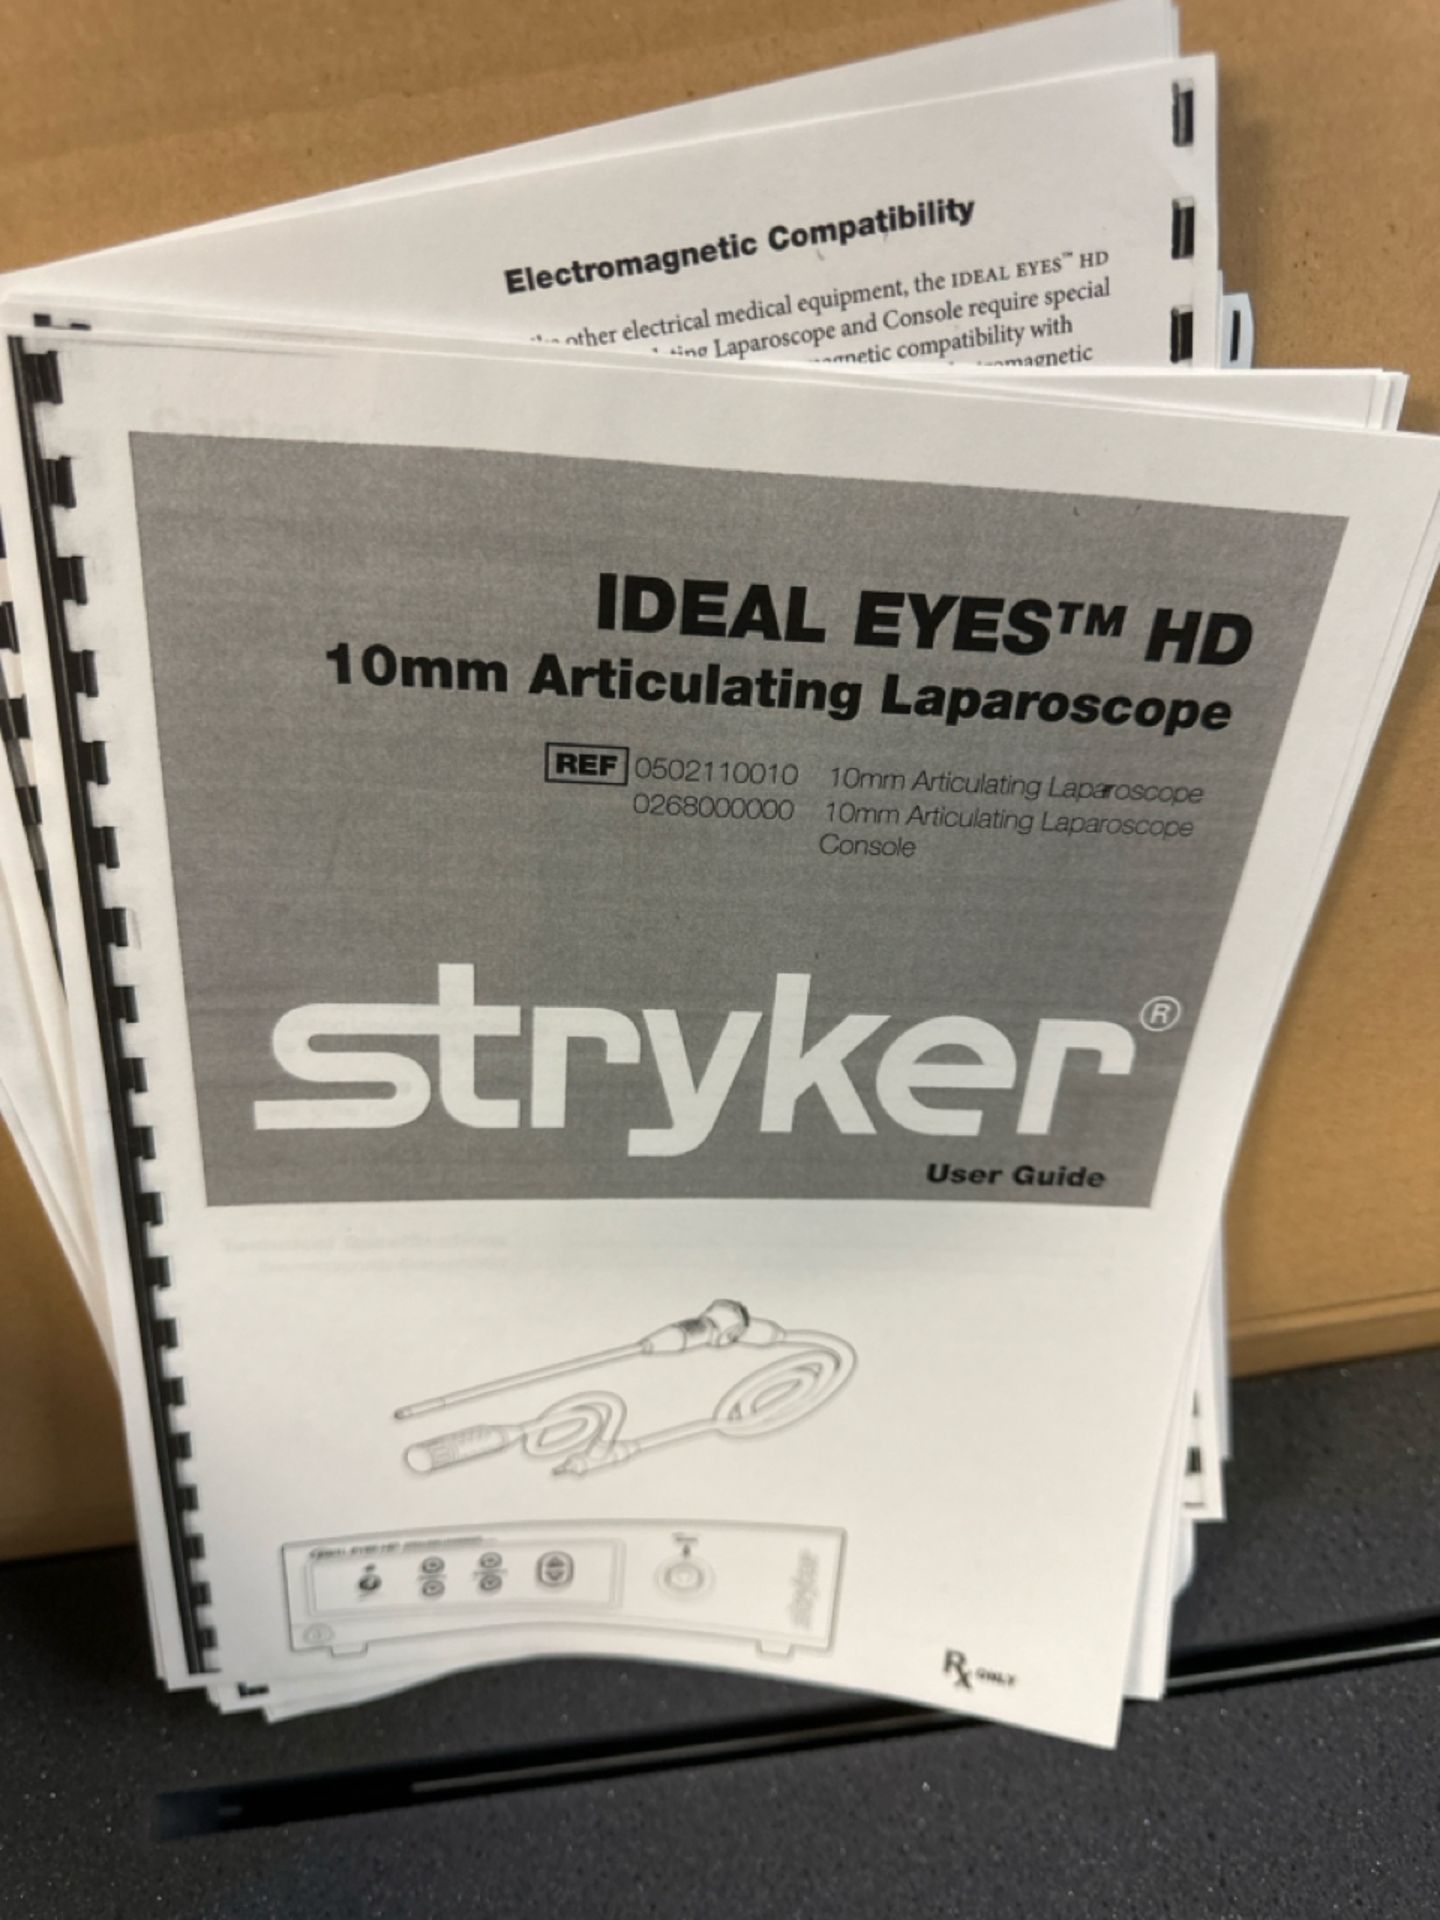 Stryker Articulating Laparoscope - Image 2 of 4